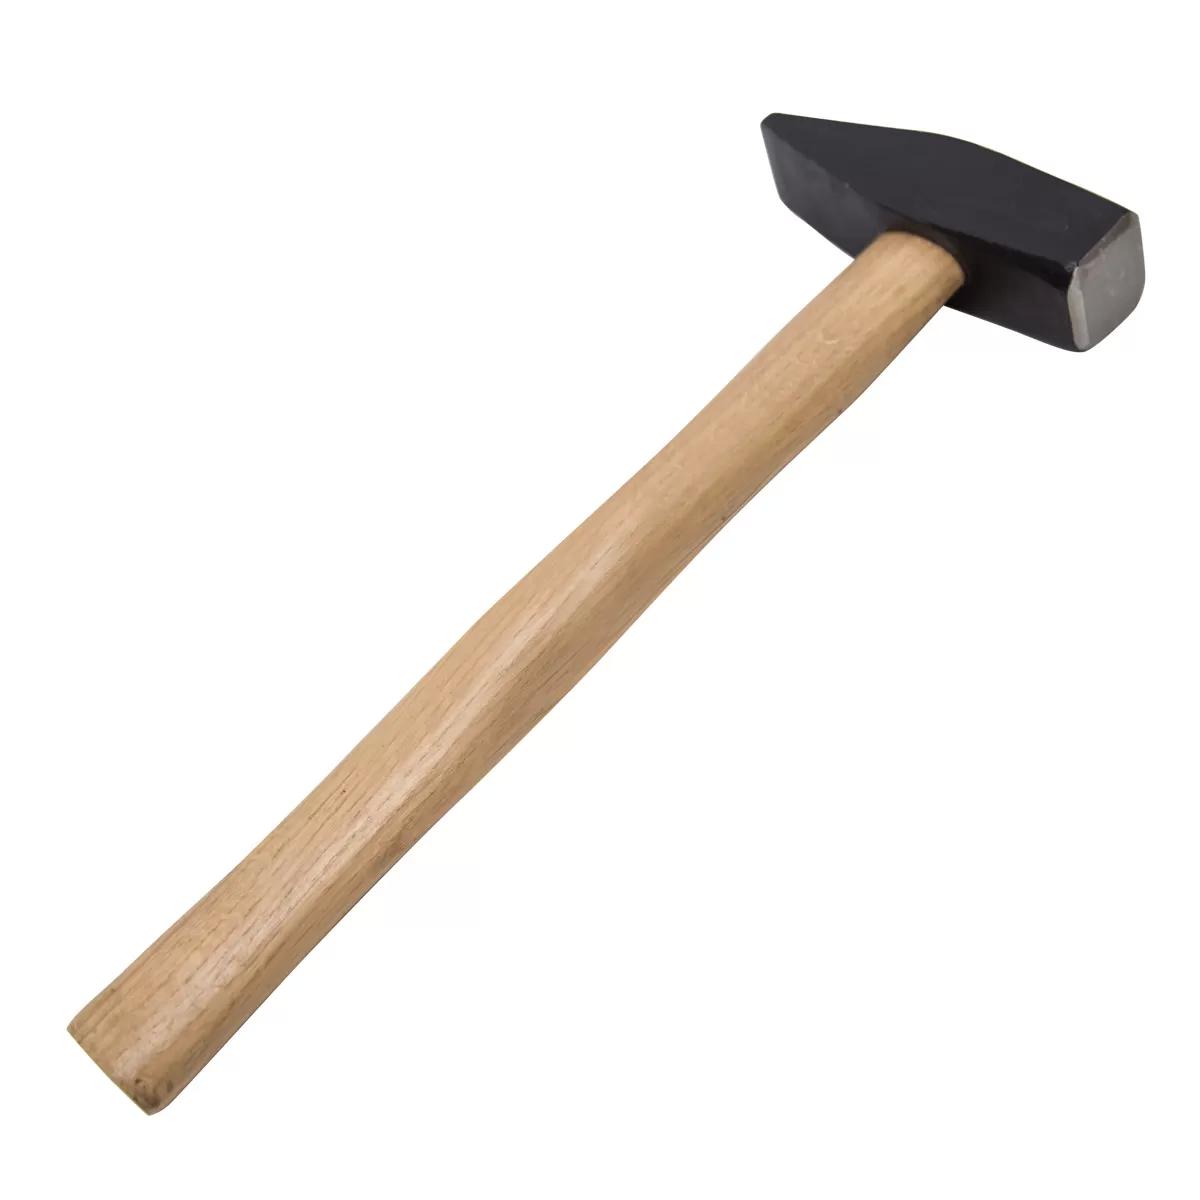 Hammer with oak wood handle, 1000gr/35oz 